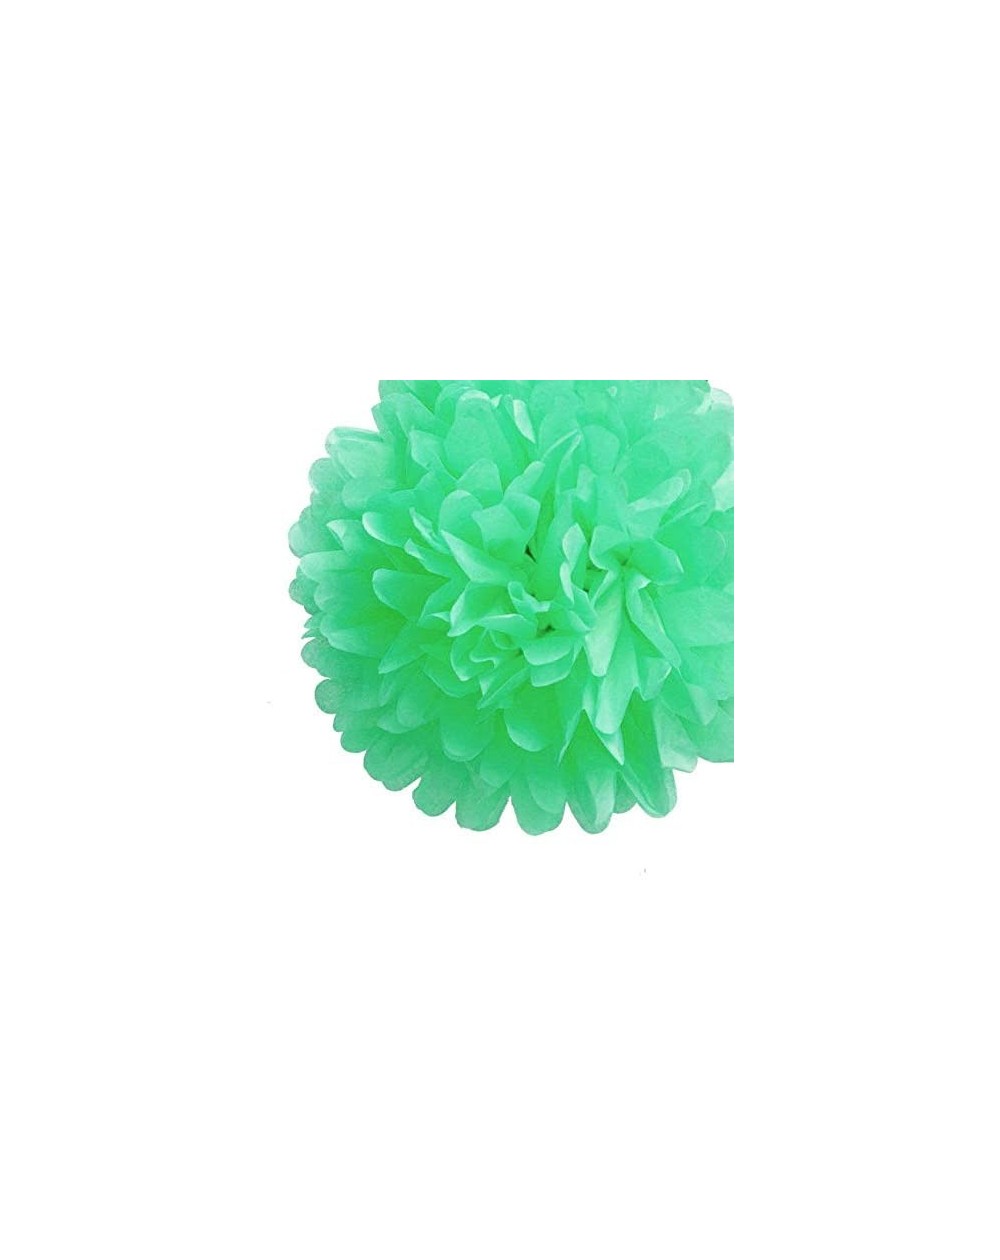 Tissue Pom Poms EZ-Fluff 12 Inch Cool Mint Green Tissue Paper Pom Poms Flowers Balls- Hanging Decorations (4 Pack) - Cool Min...